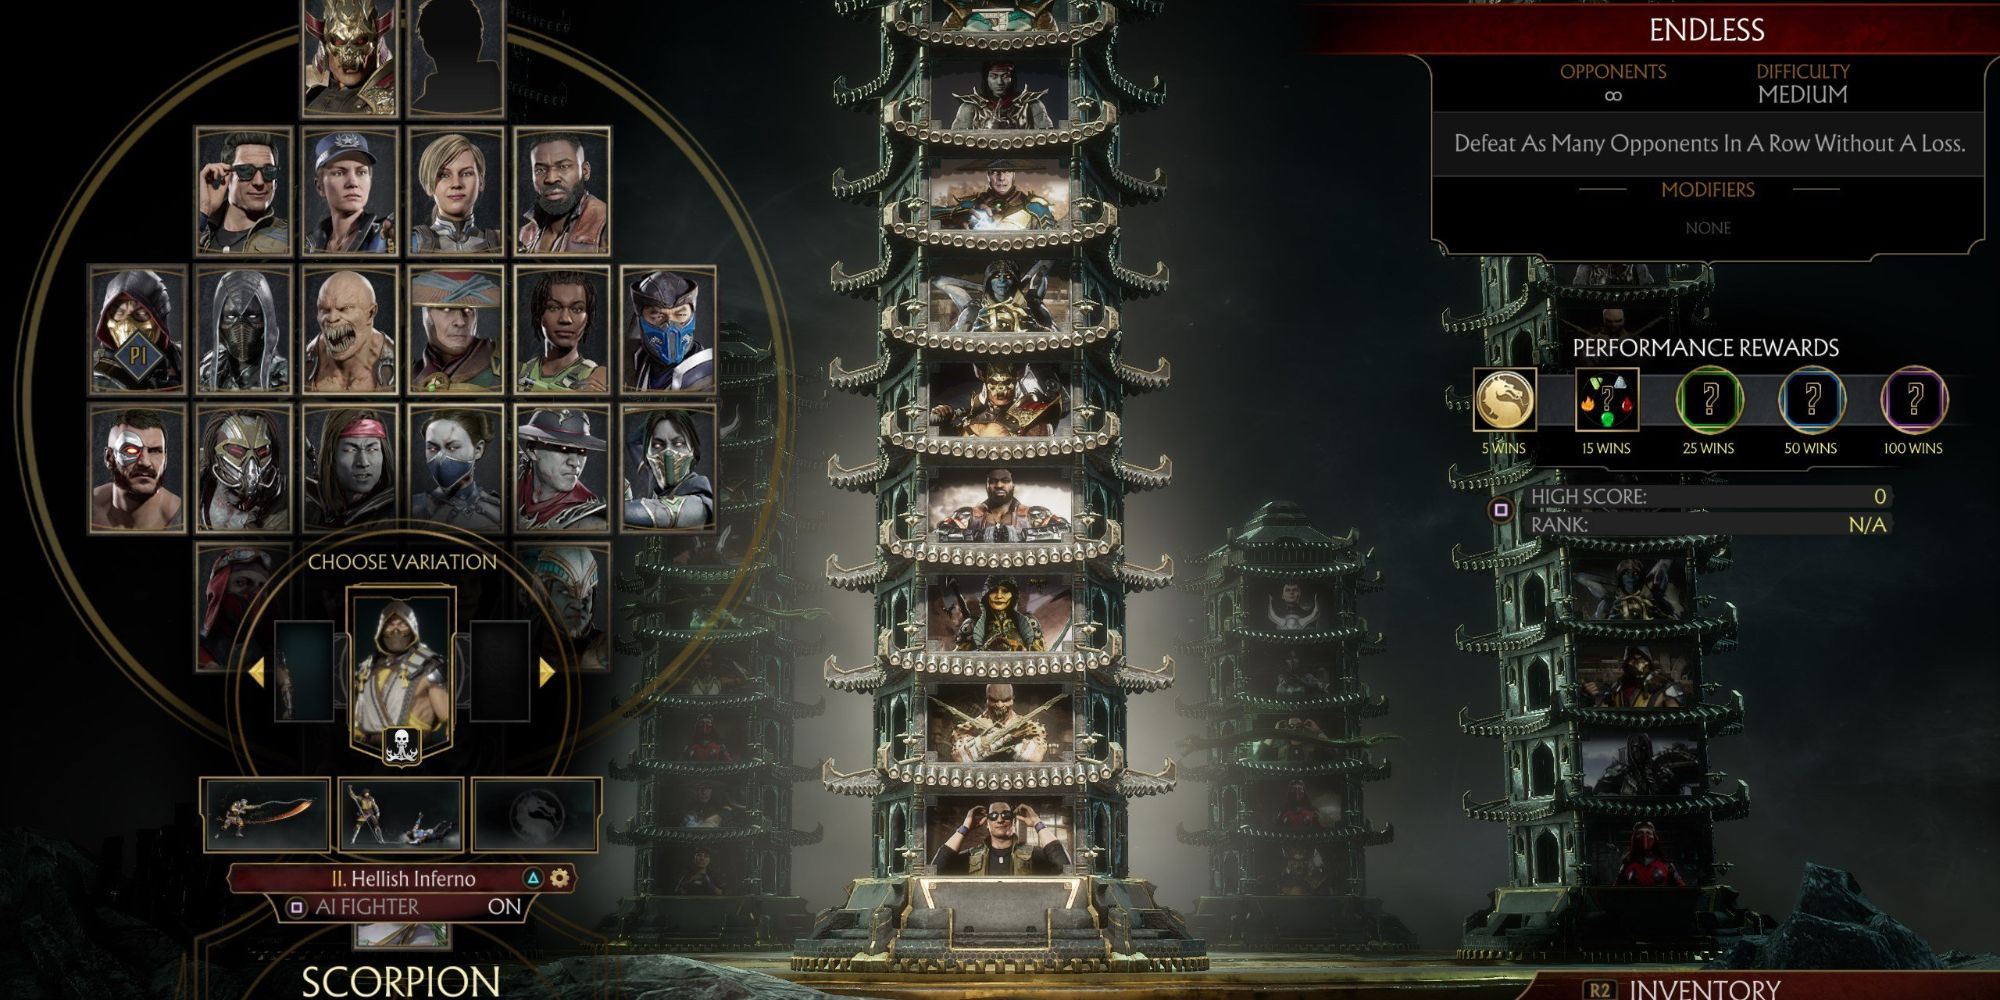 Mortal Kombat 11 Endless Tower with Scorpion